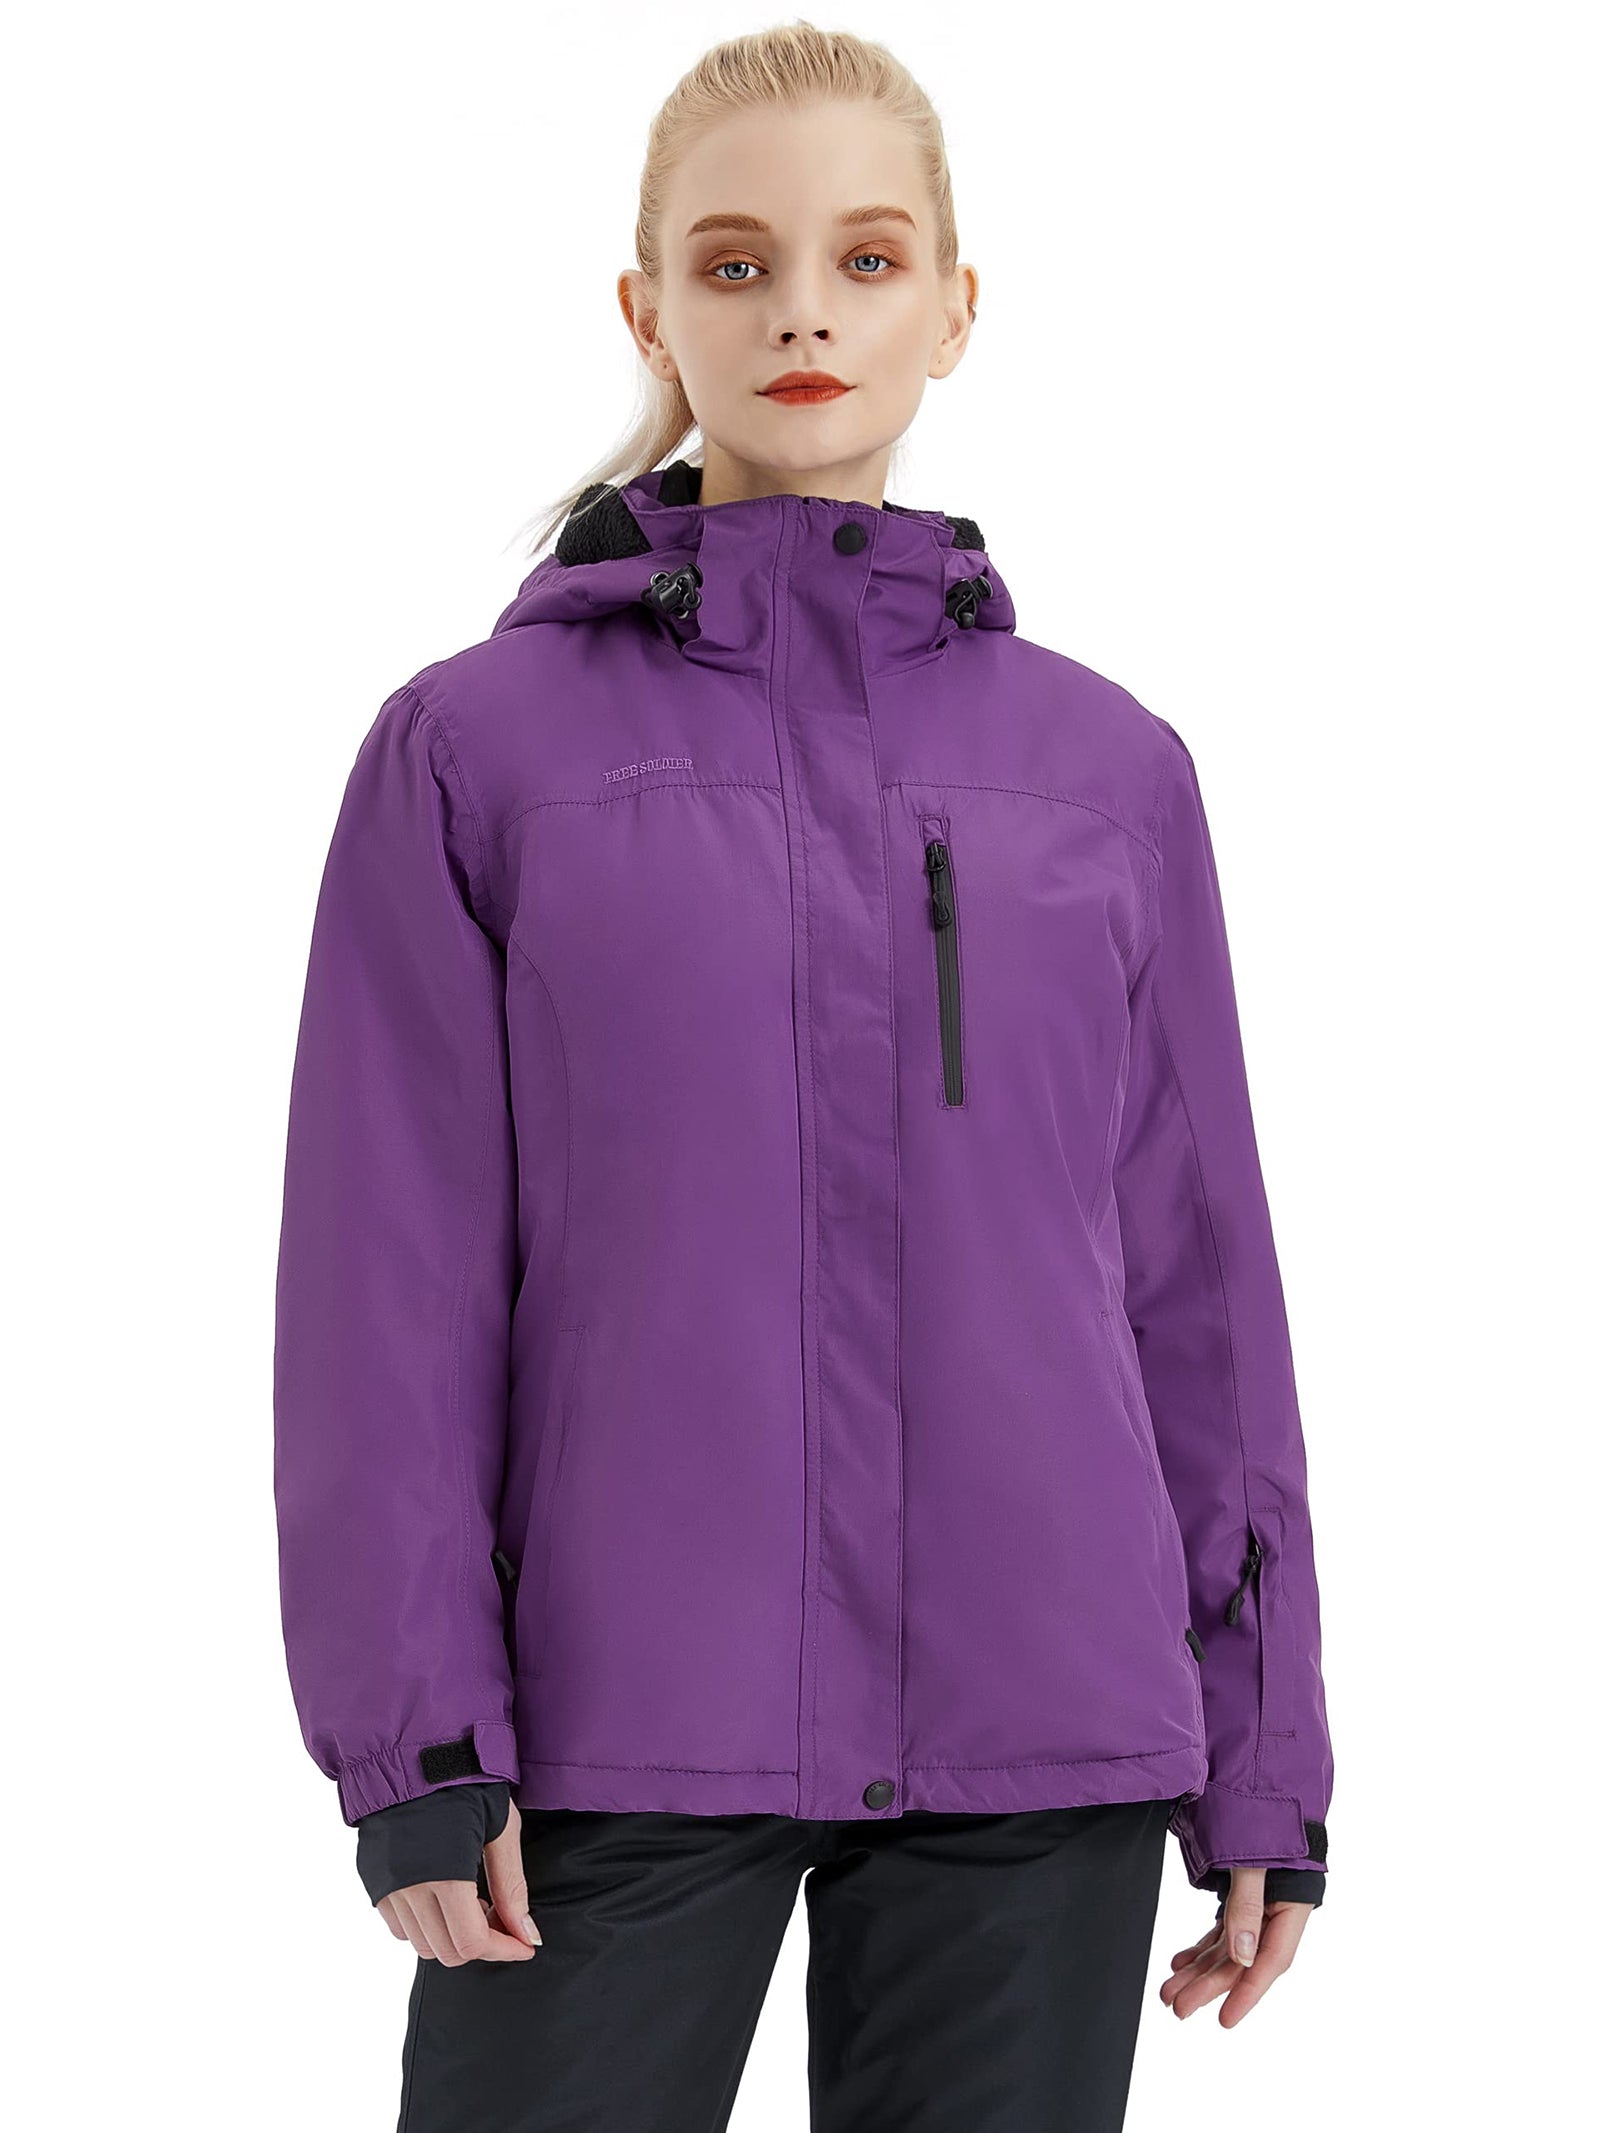 Women's Snow pants Hiking ski Waterproof Fleece Lined Outdoor Cargo Pants  Softshell Winter Warm Pants with Zipper Pockets,H4409,Army,10